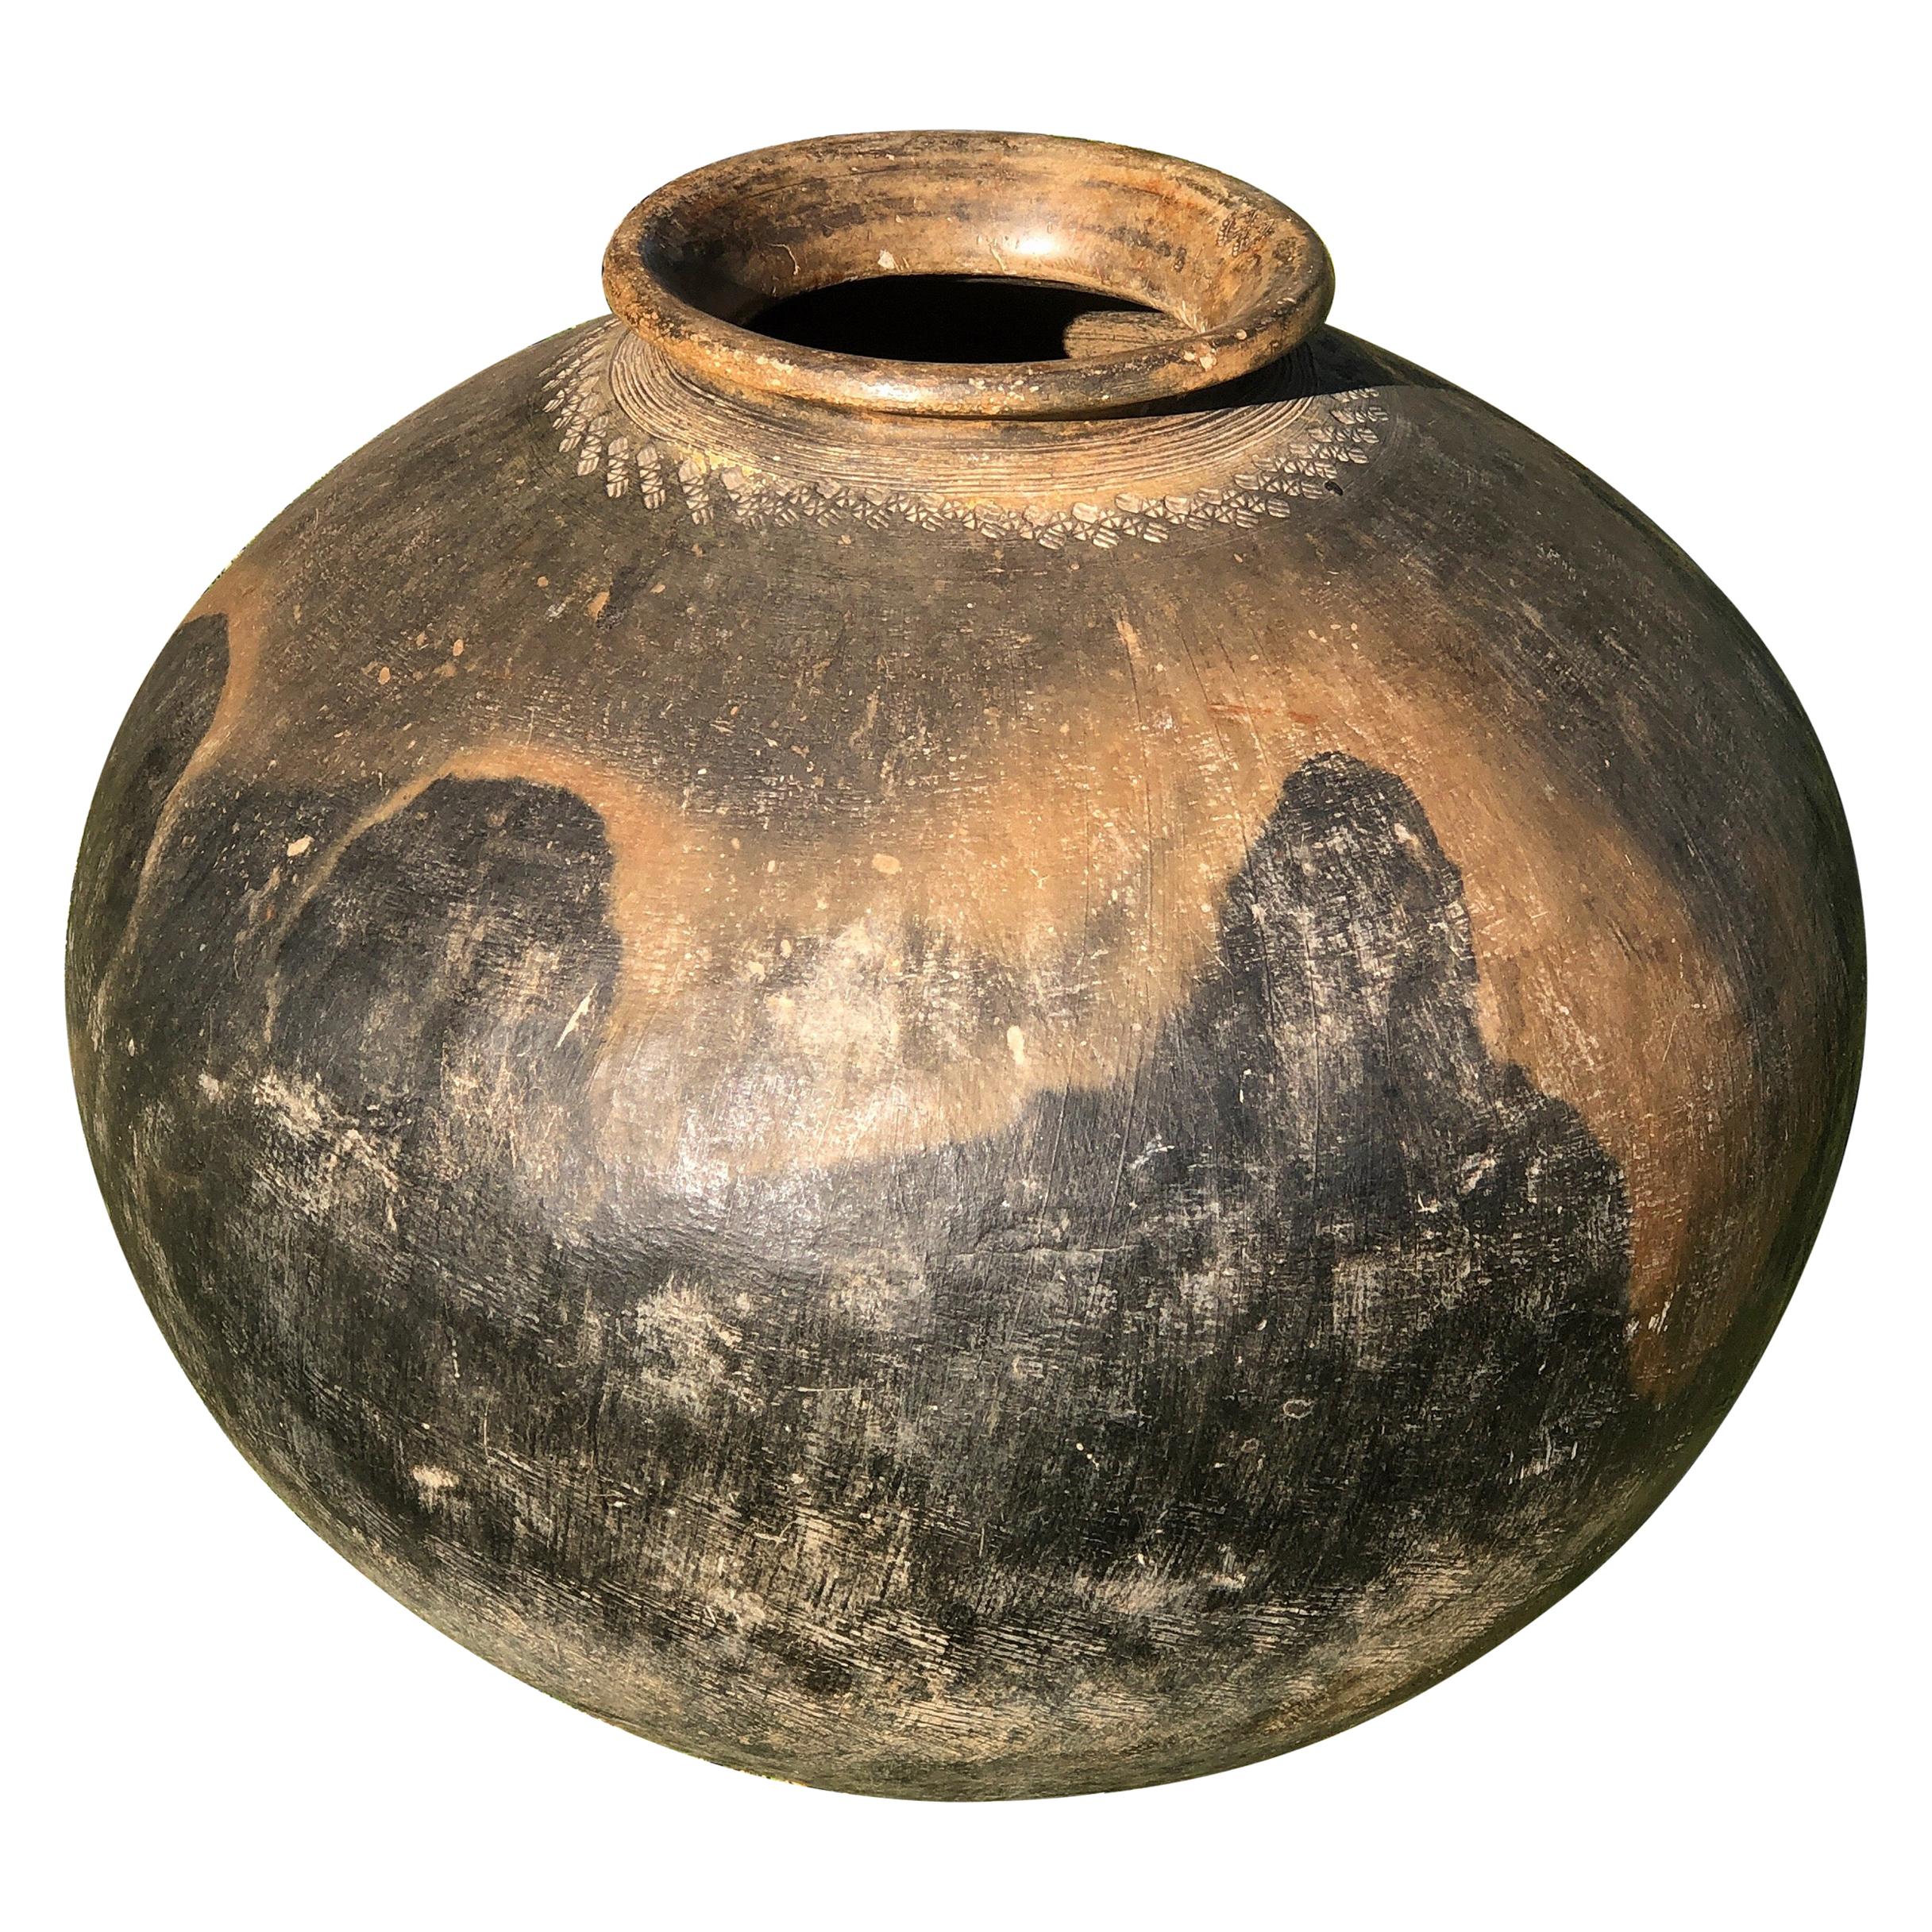 Antique Burmese Clay Pot Urn Vase, 19th Century Wabi Sabi Axel Vervoordt Style For Sale